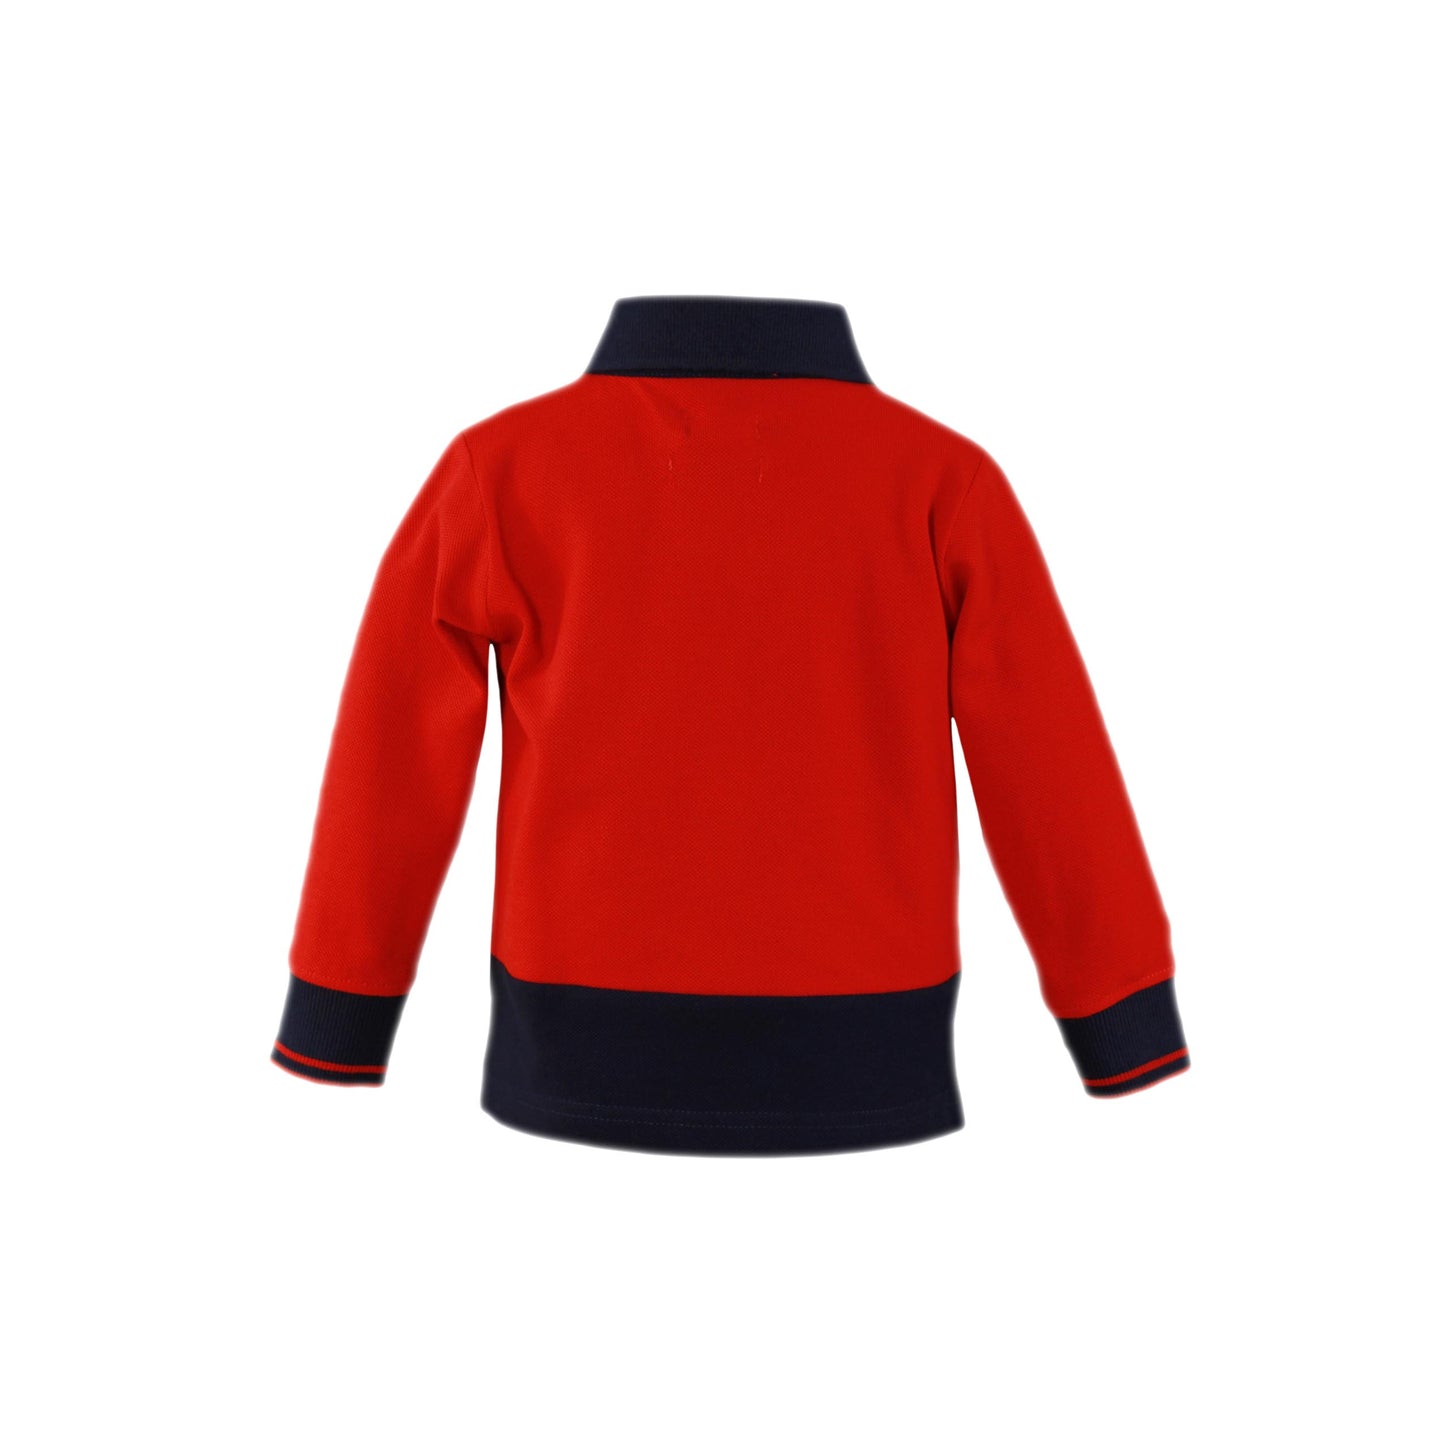 MIRANDA NEL BLU Red & Navy Baby Boys Polo Shirt - 1110